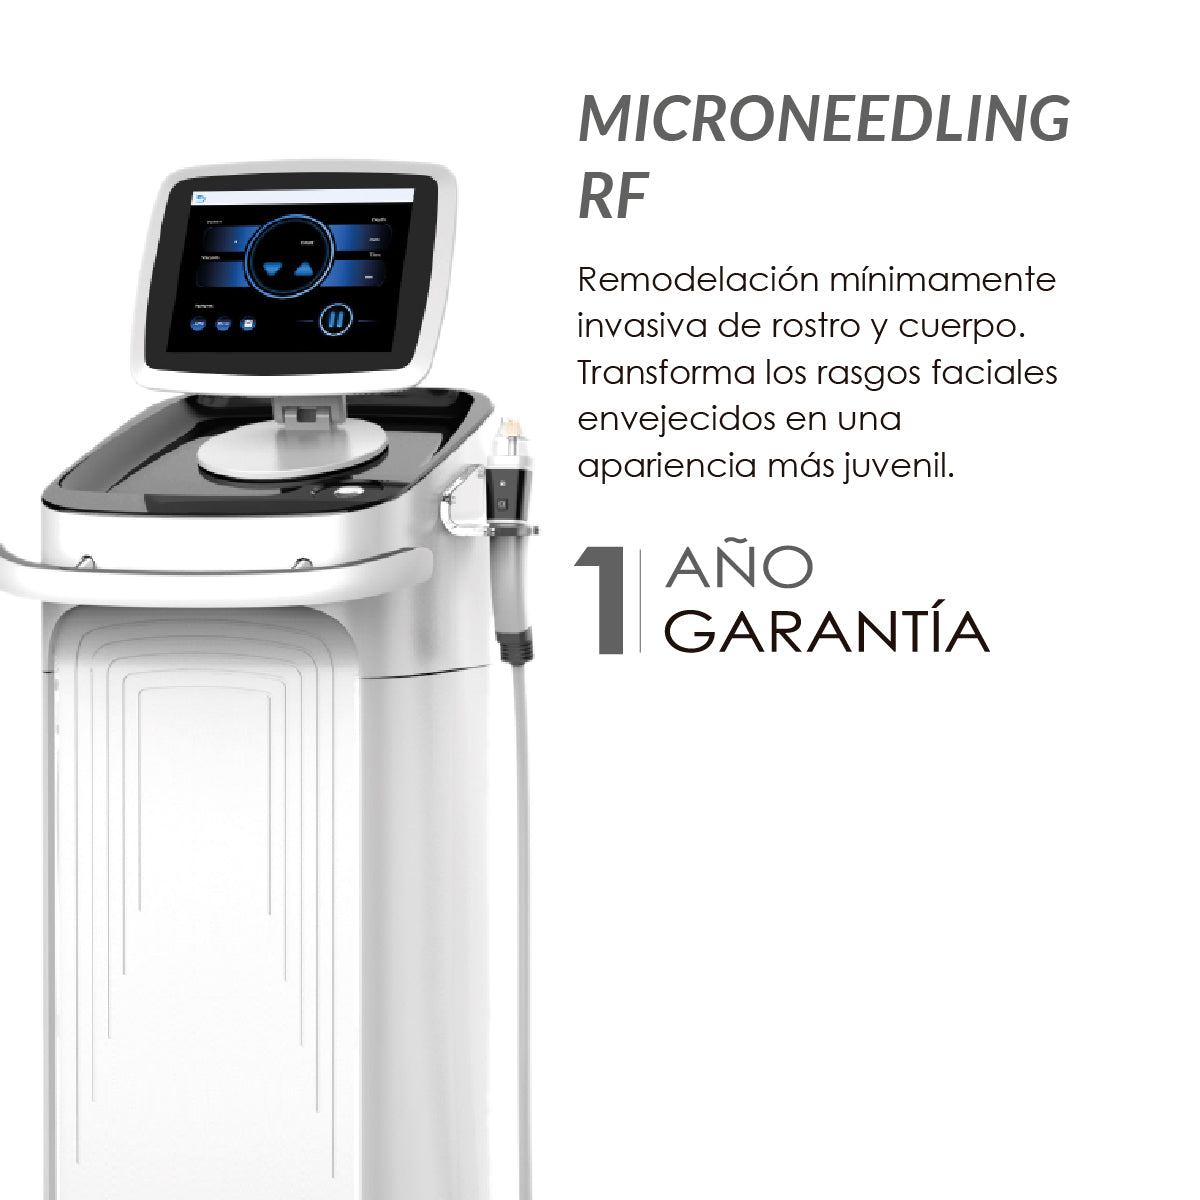 Microneedling RF